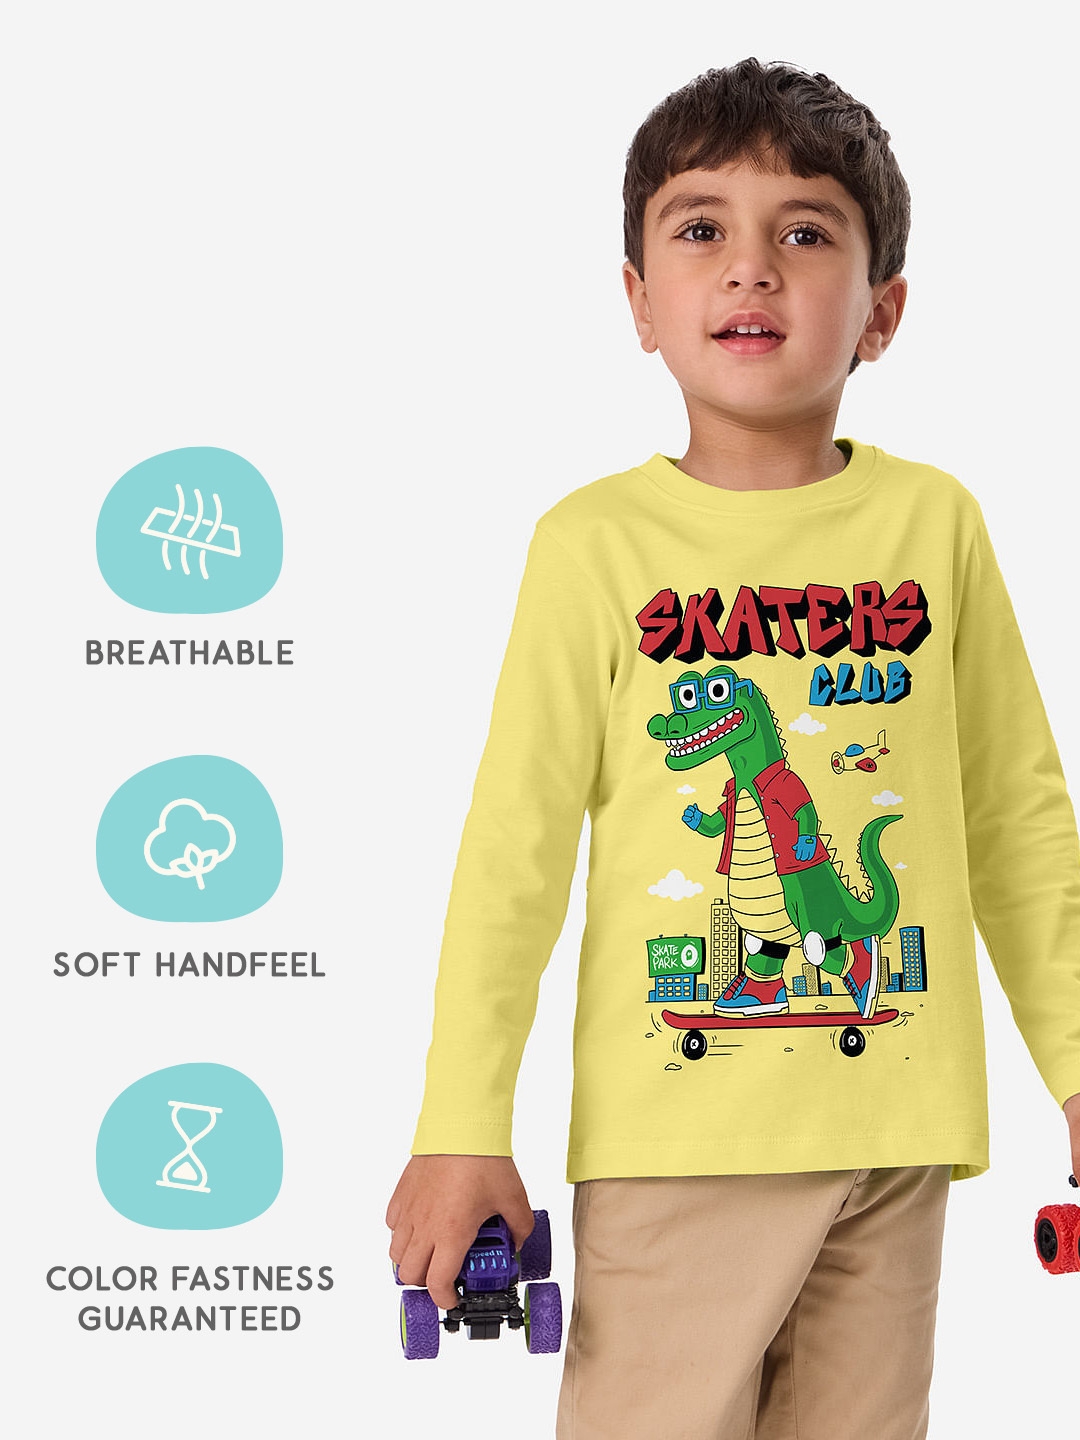 Boys TSS Originals: Skater Gator Boys Cotton Full Sleeve T-Shirt